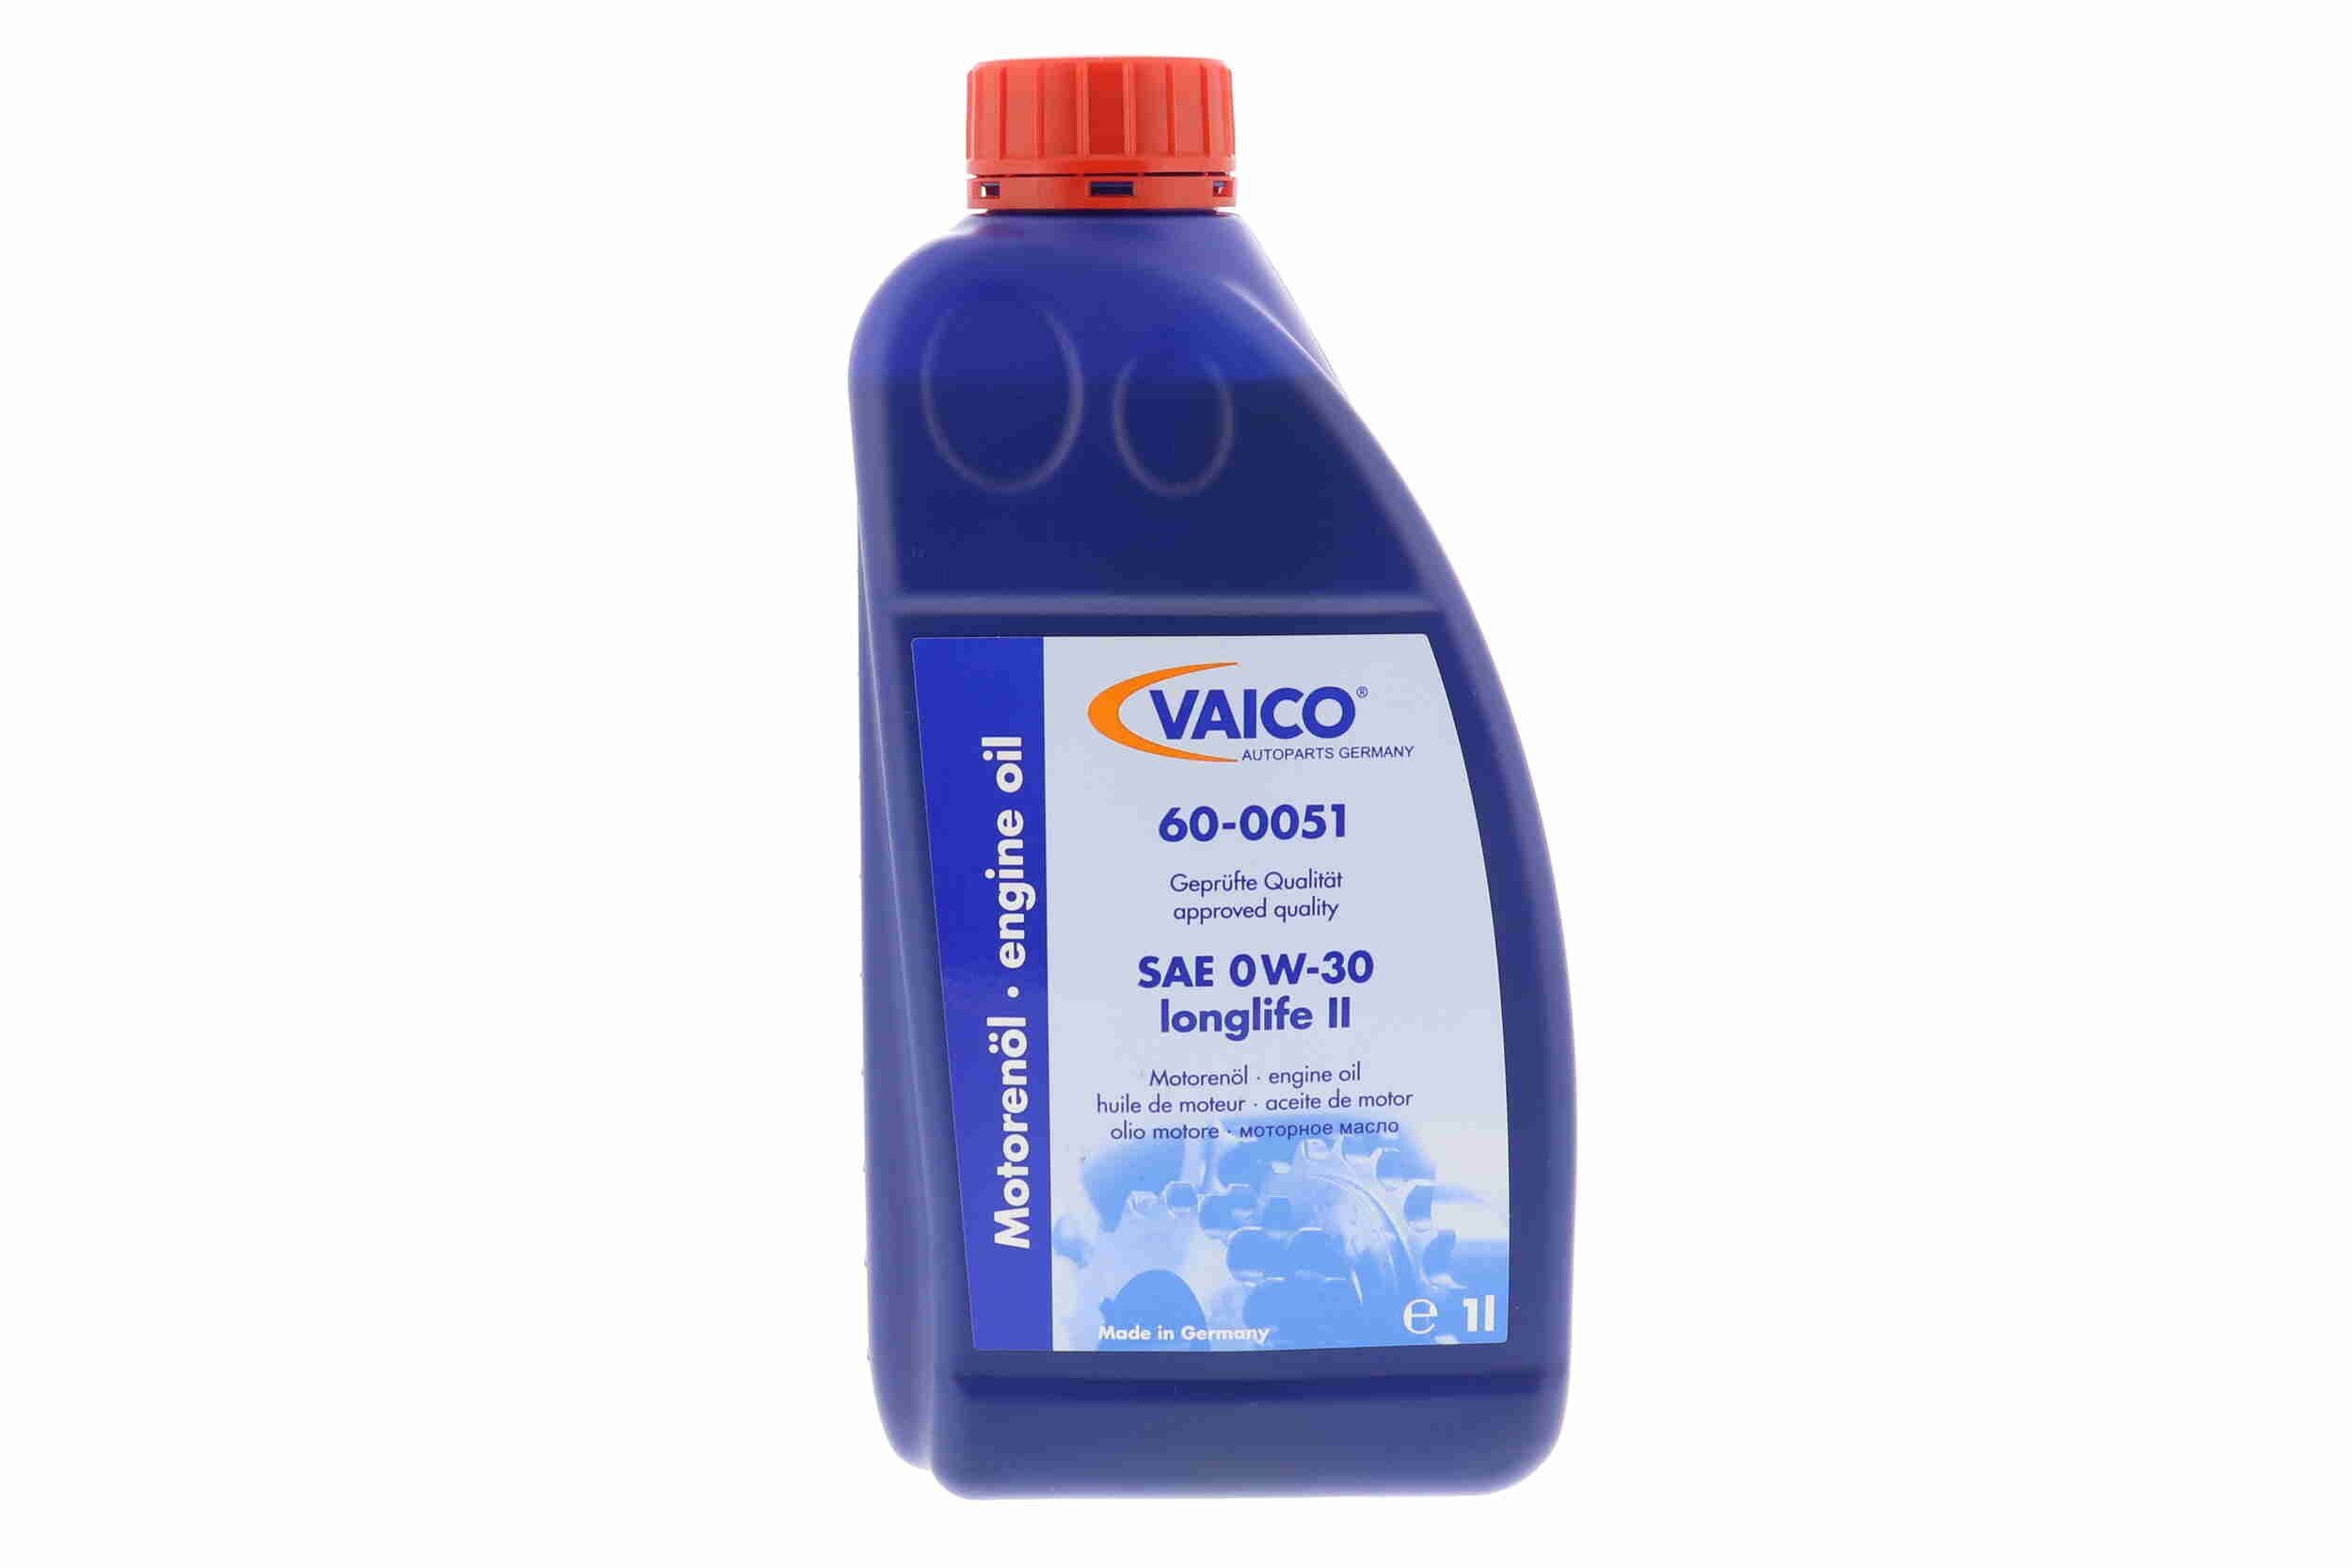 Auto oil VAICO 0W-30, 1l longlife V60-0051